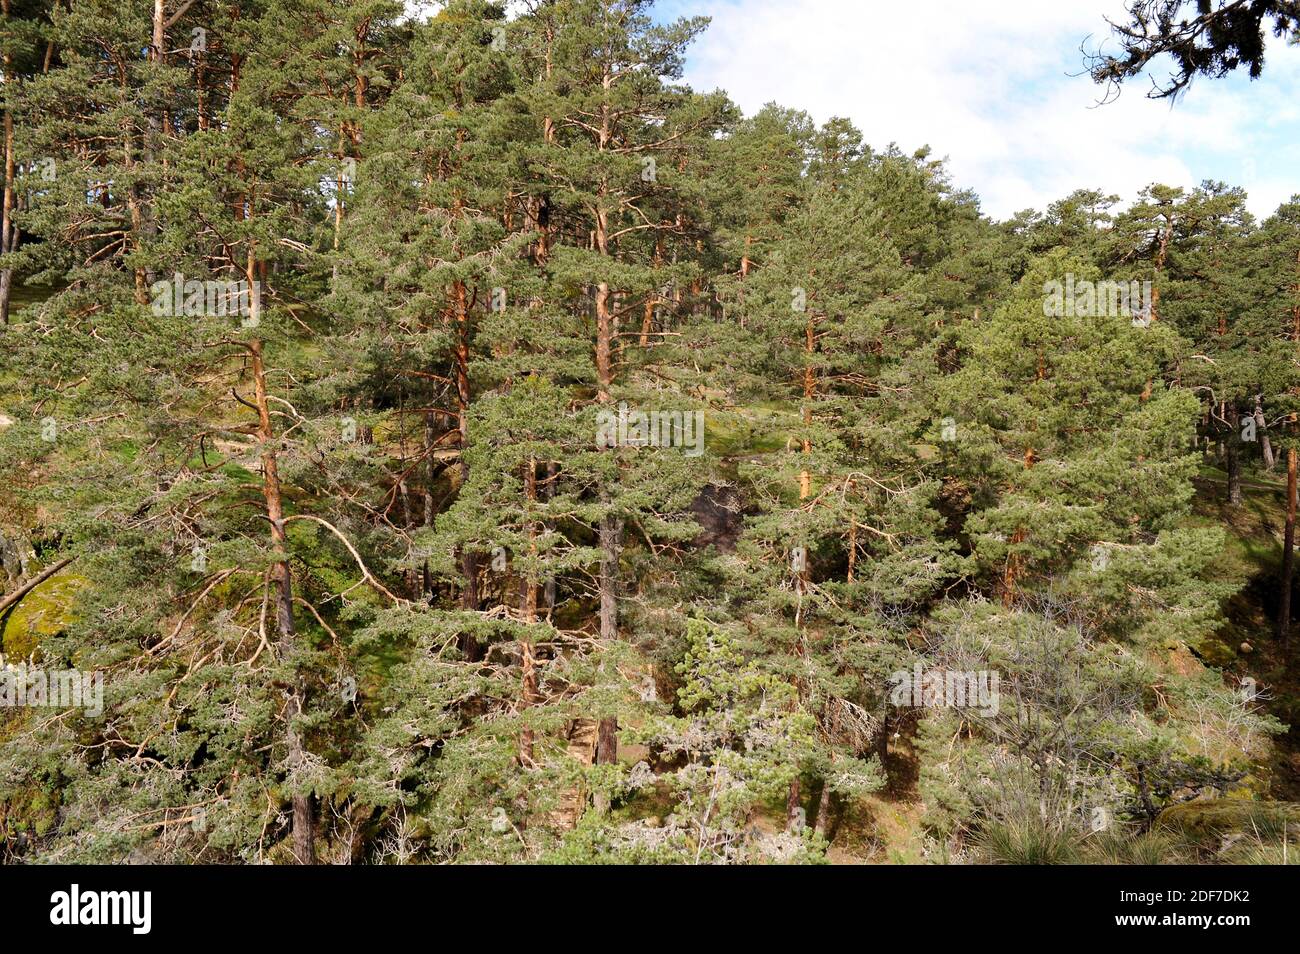 Pinar de Valsain (Pinus sylvestris). Segovia province, Castilla y Leon, Spain. Stock Photo